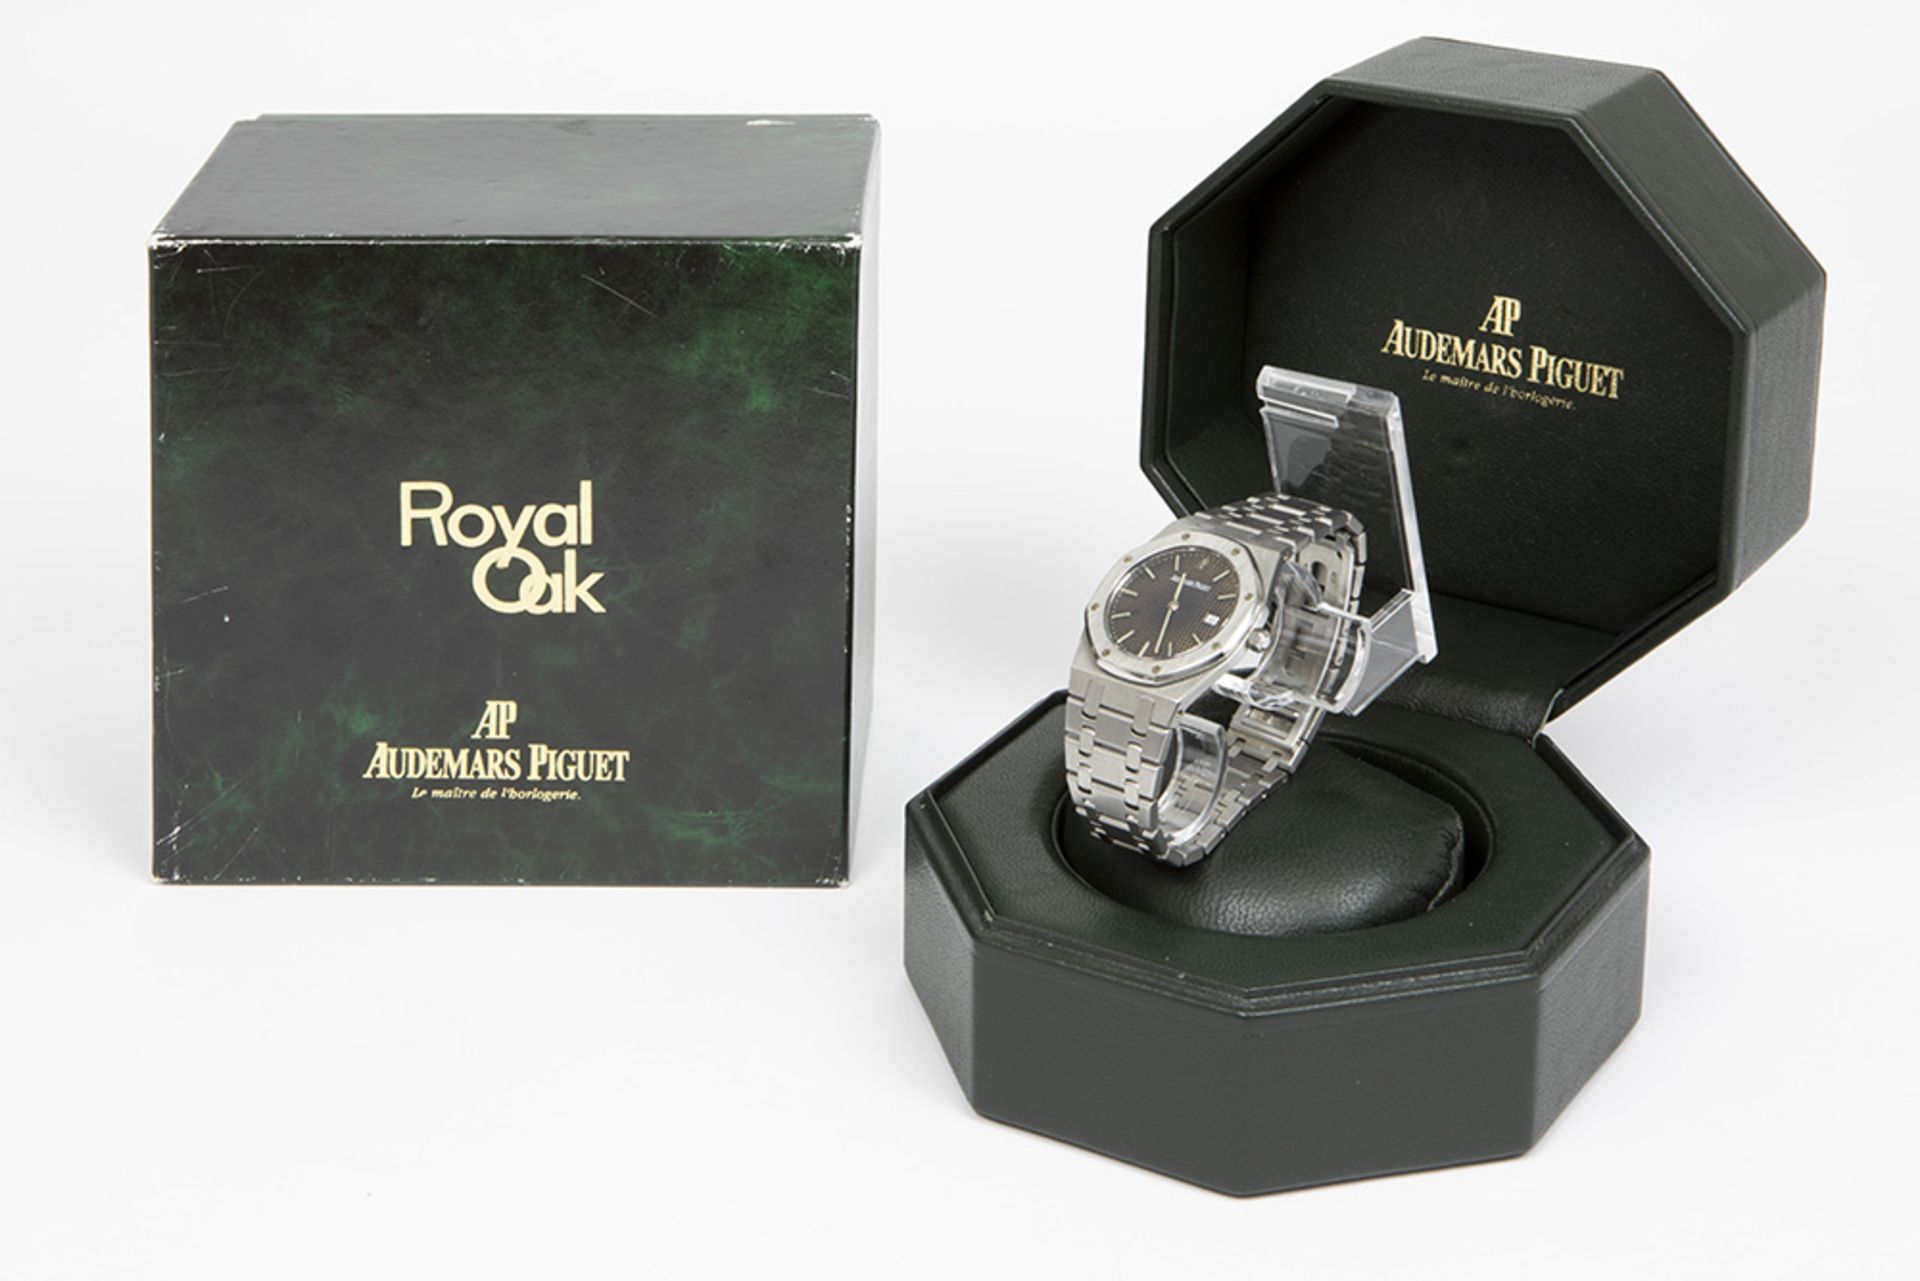 completely original Audemars Piguet marked quartz "Royal Oak 33 mmm with date" wristwatch in steel - - Image 2 of 2